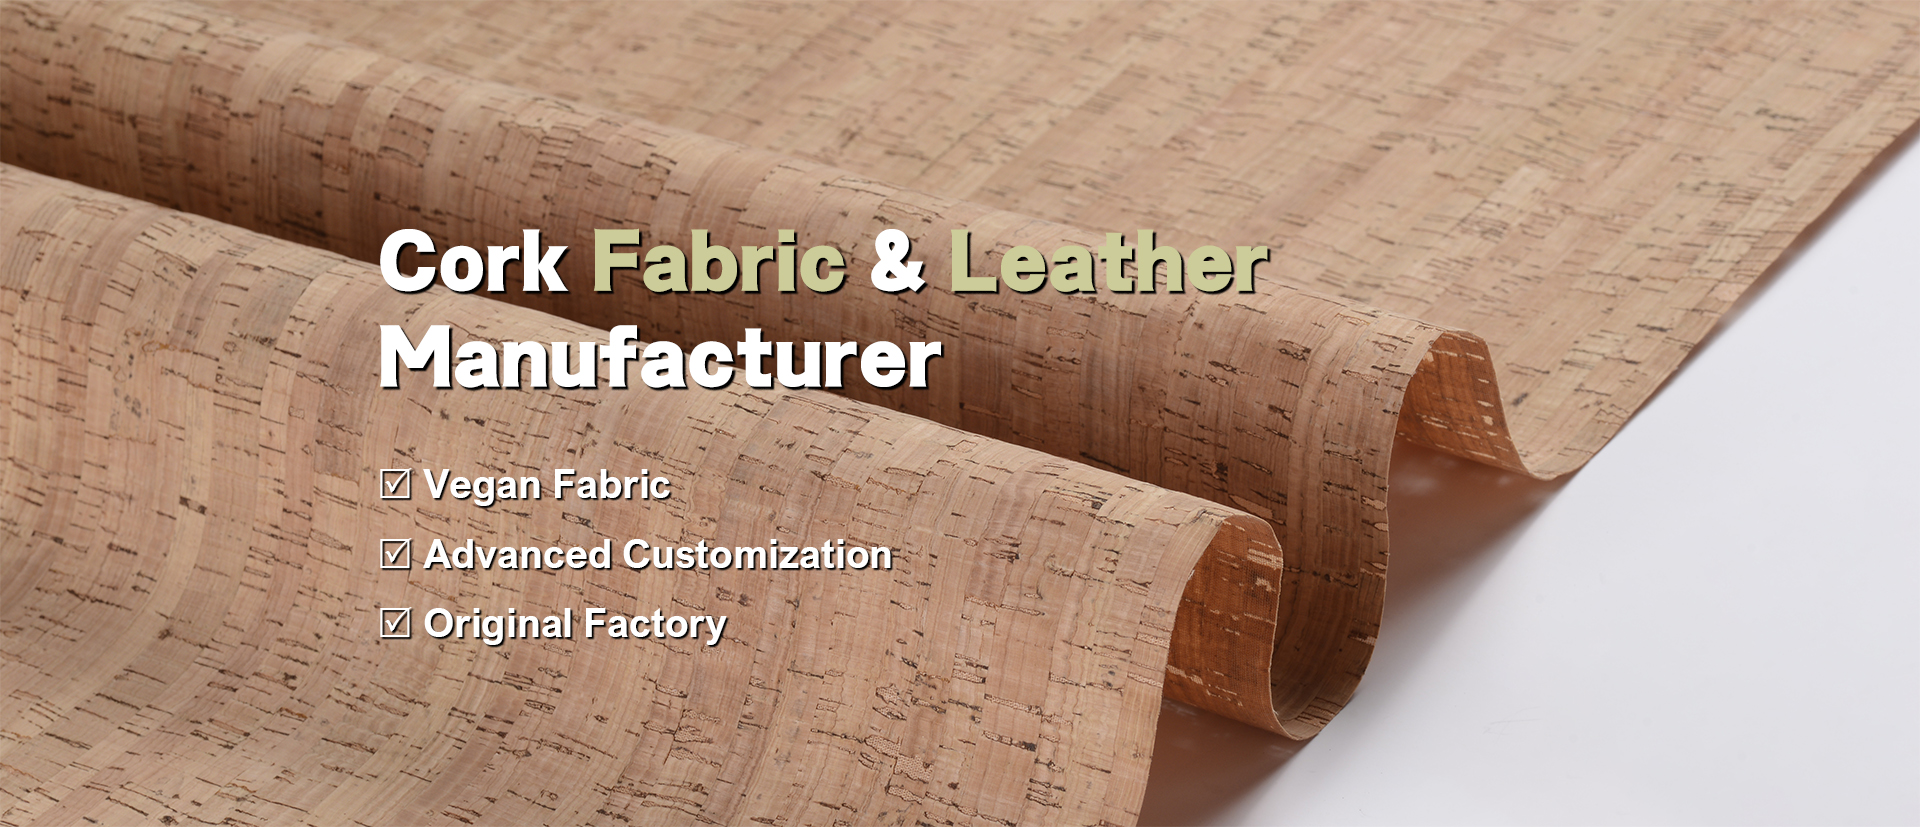 Cork Fabric & Leather Manufacturer